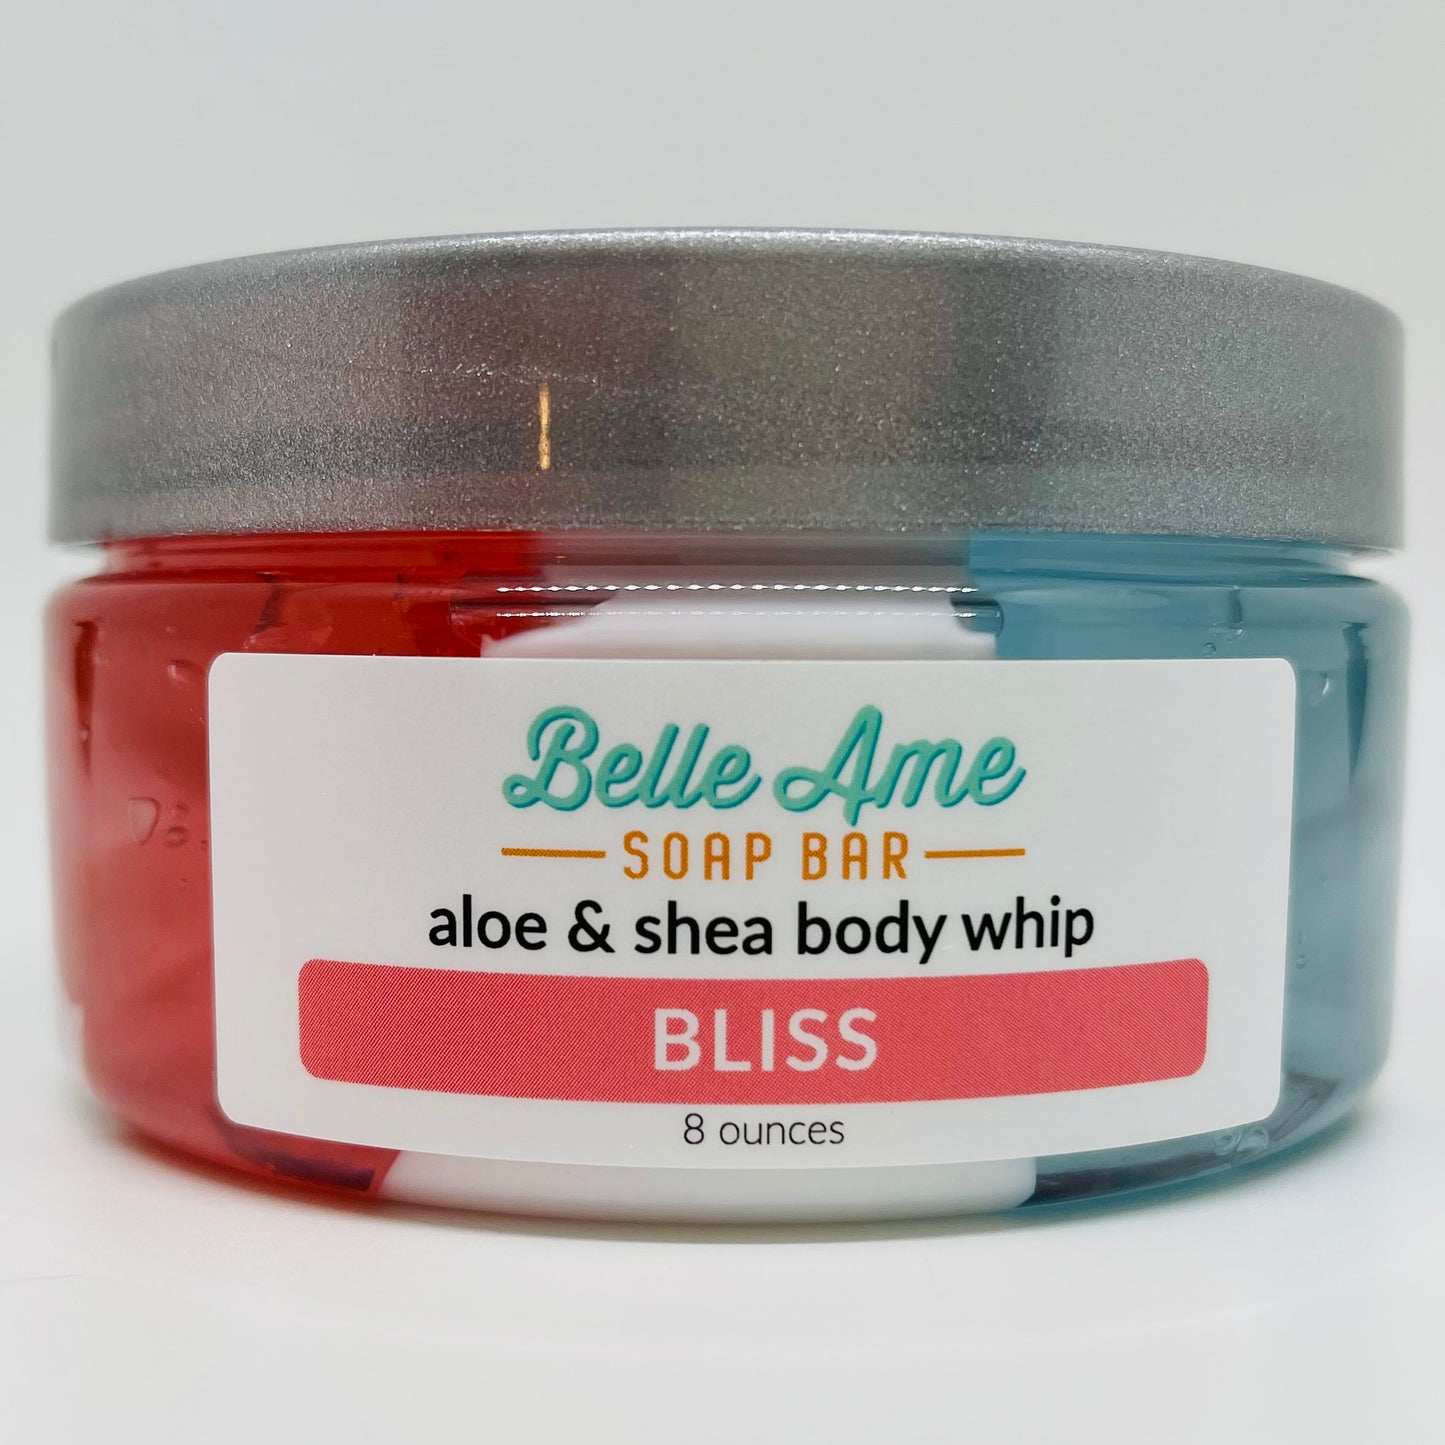 Bliss Aloe & Shea Body Whip